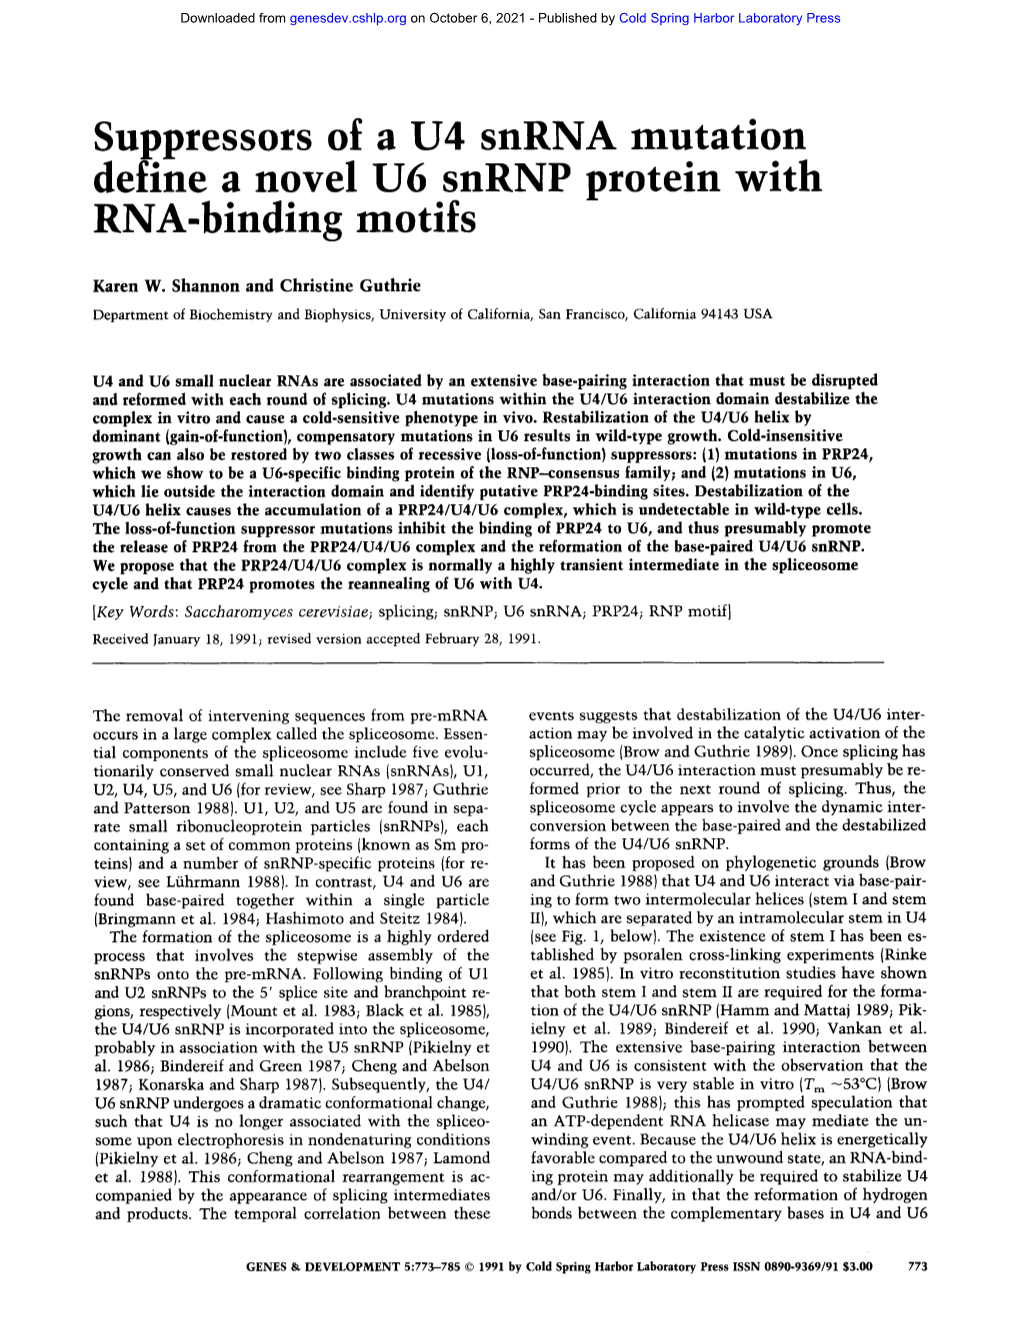 Suppressors of a U4 Snrna Mutation Define a Novel U6 Snrnp Protein with RNA-Binding Motifs